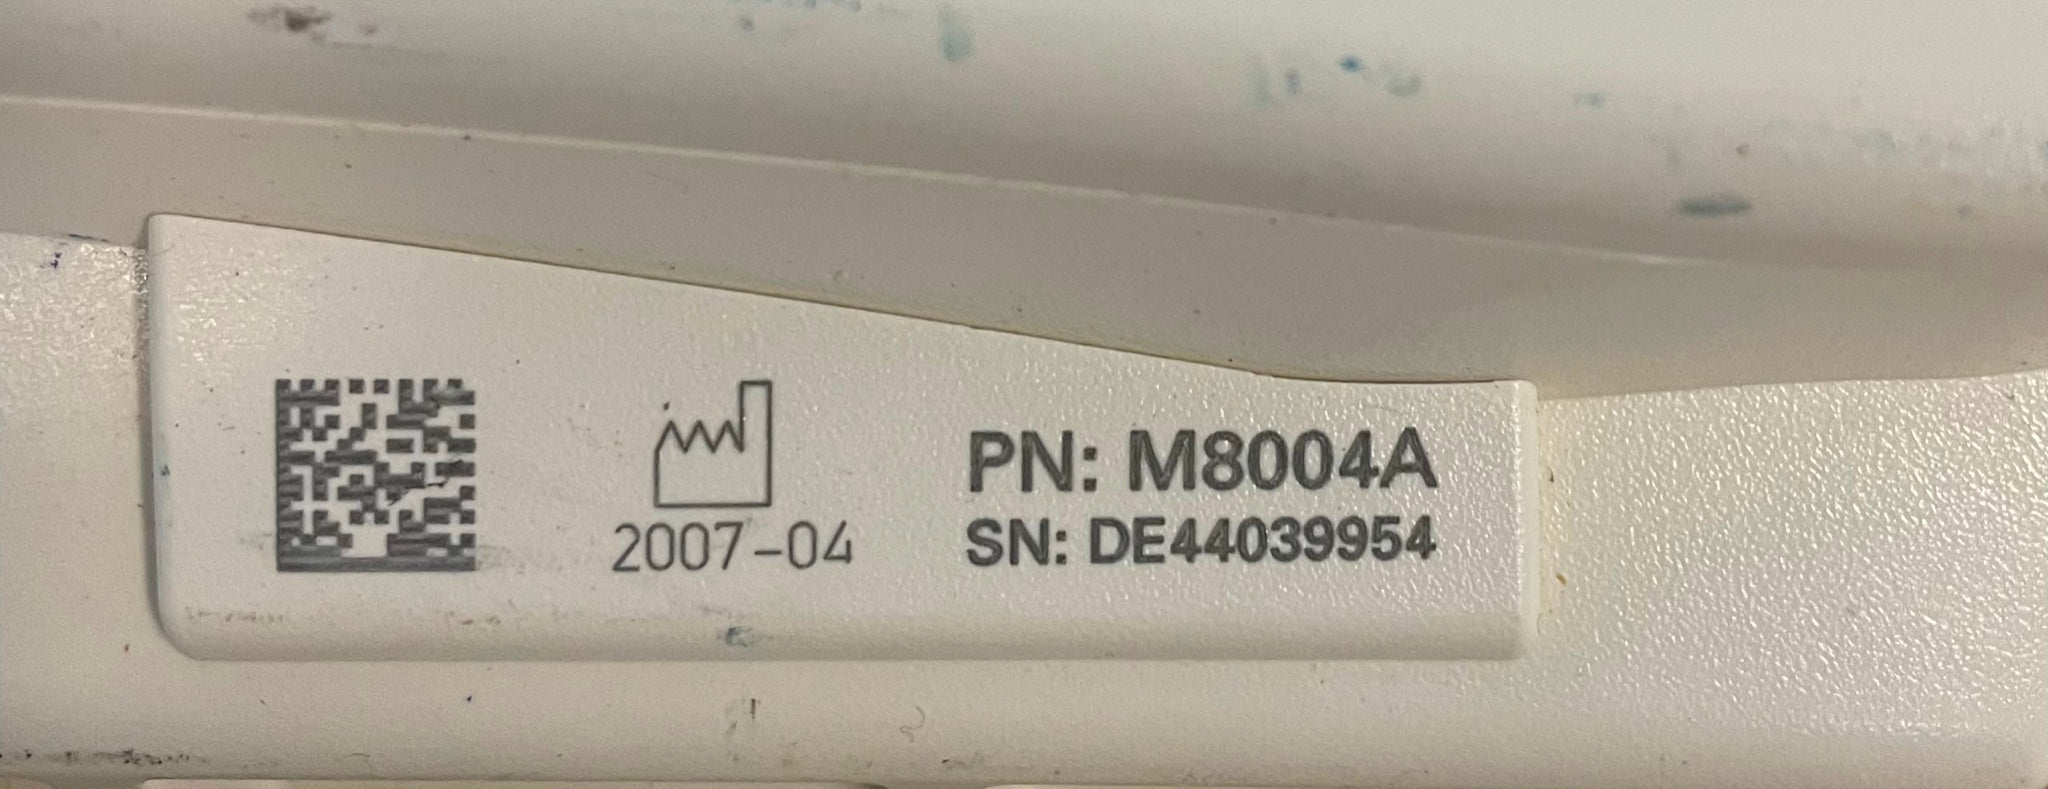 Philips Intellivue MP50 Patient Monitor SN:DE44039954 REF:M8004A DIAGNOSTIC ULTRASOUND MACHINES FOR SALE